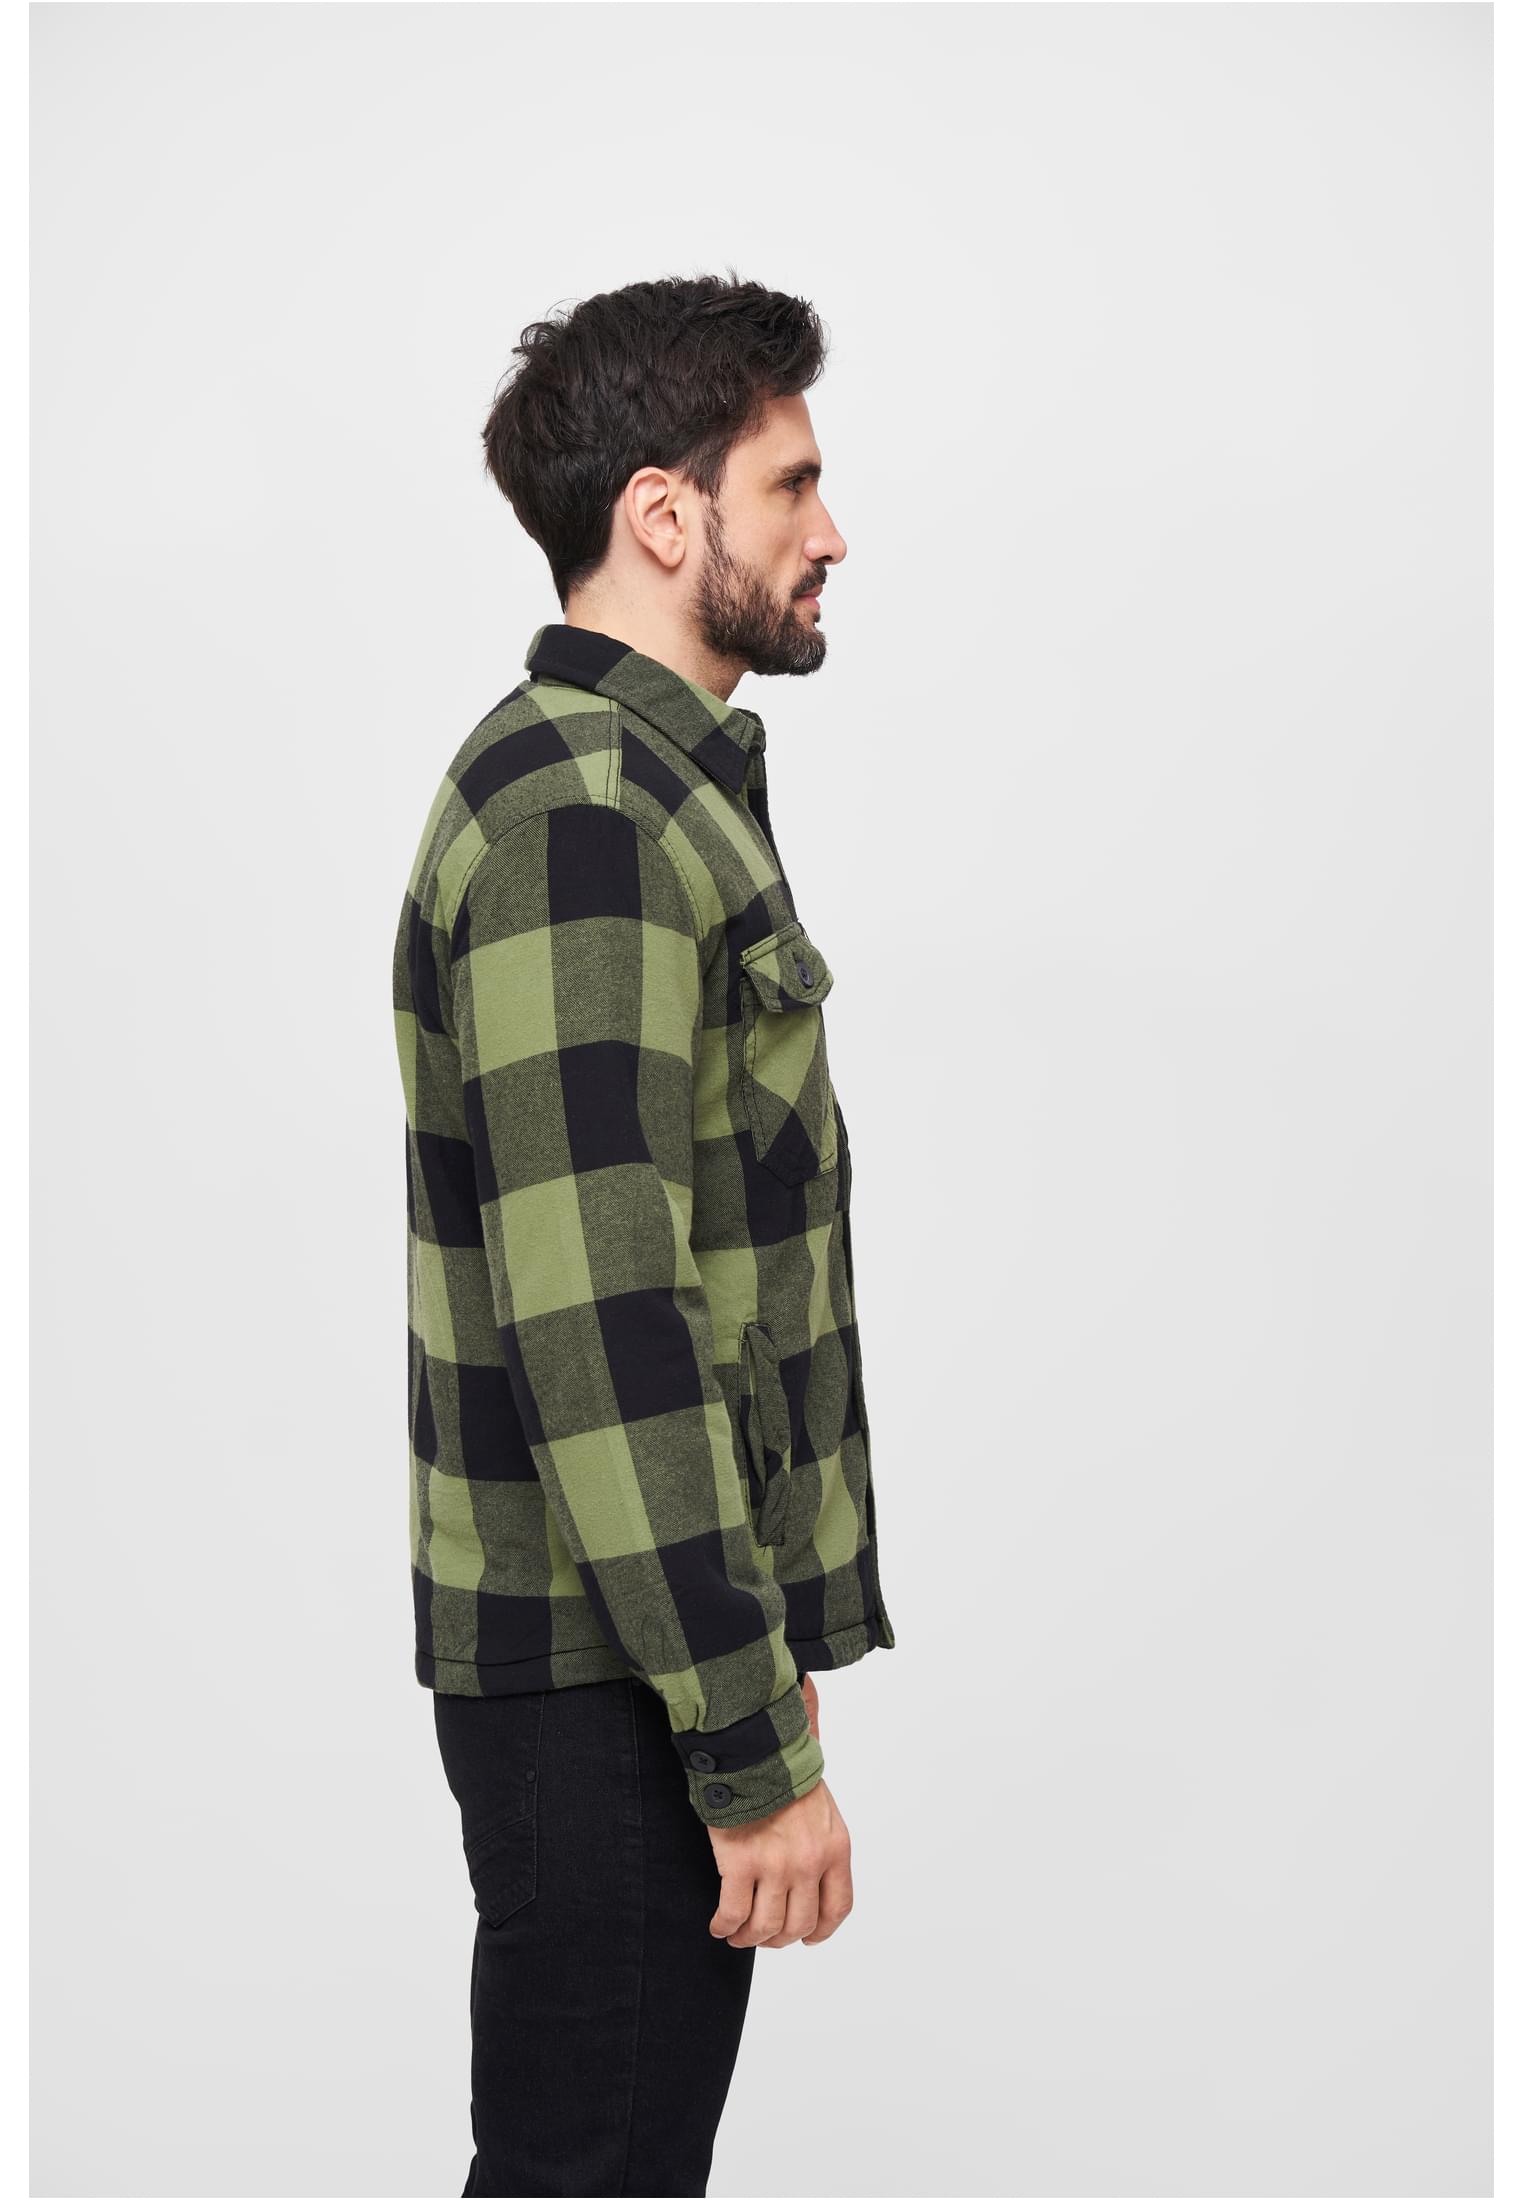 Jacken Lumberjacket in Farbe black/olive